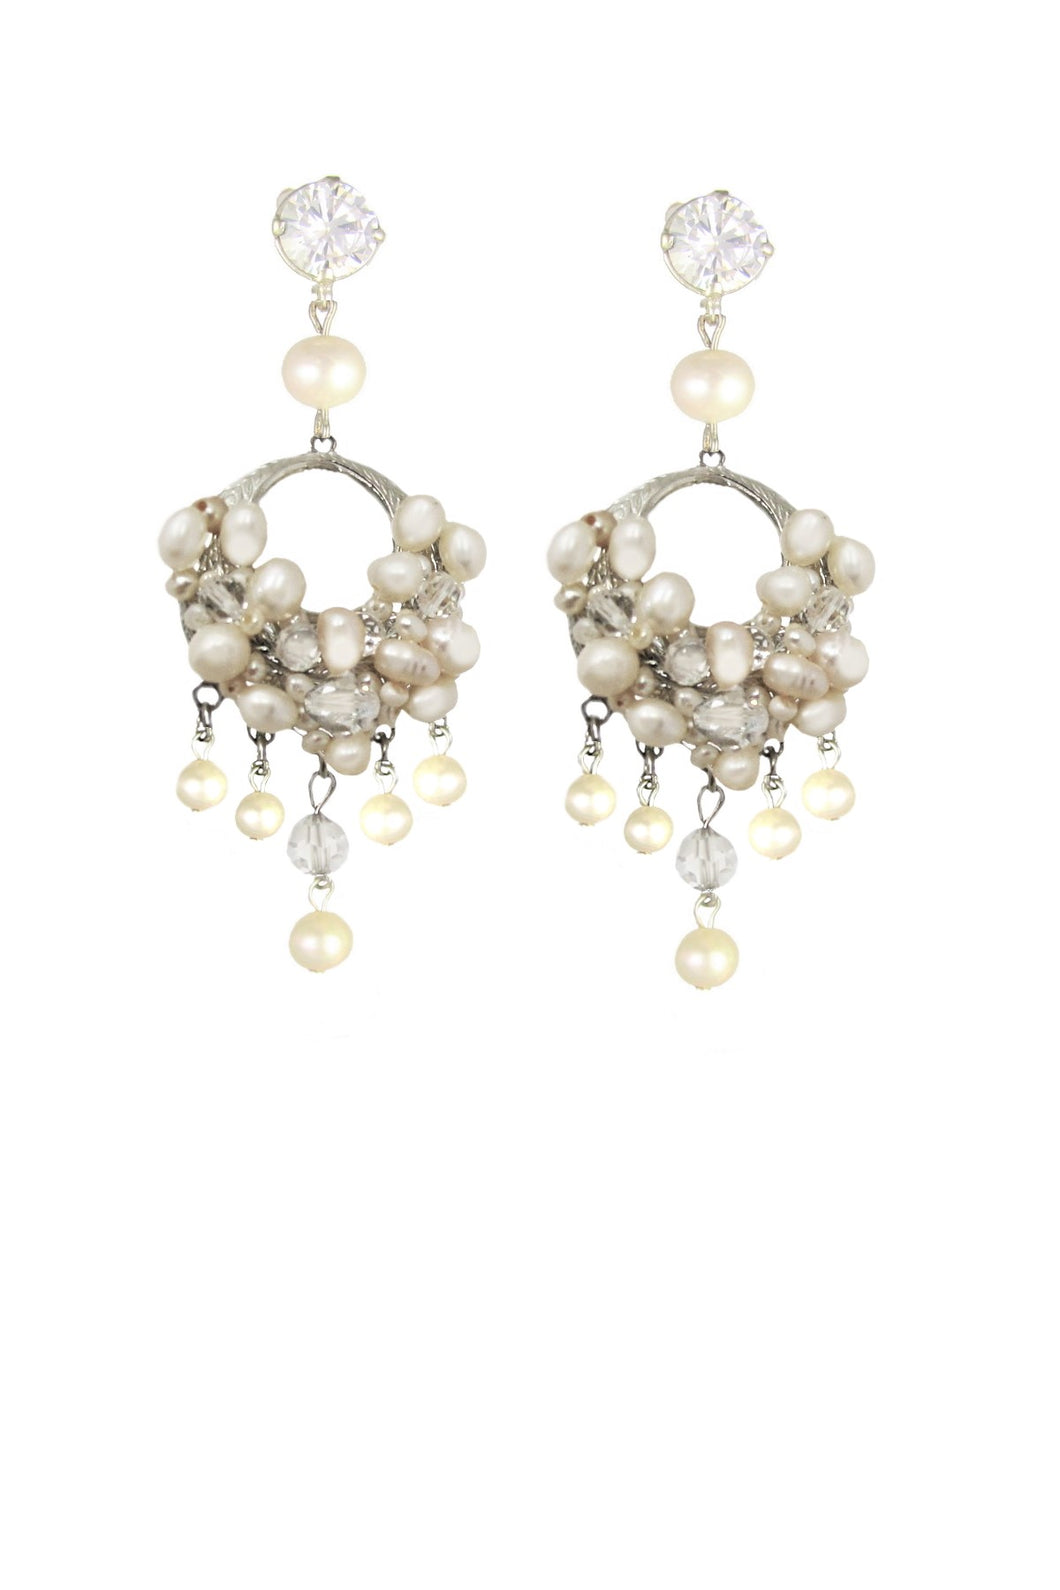 Pearls and Swarovski Crystals Jane Earrings